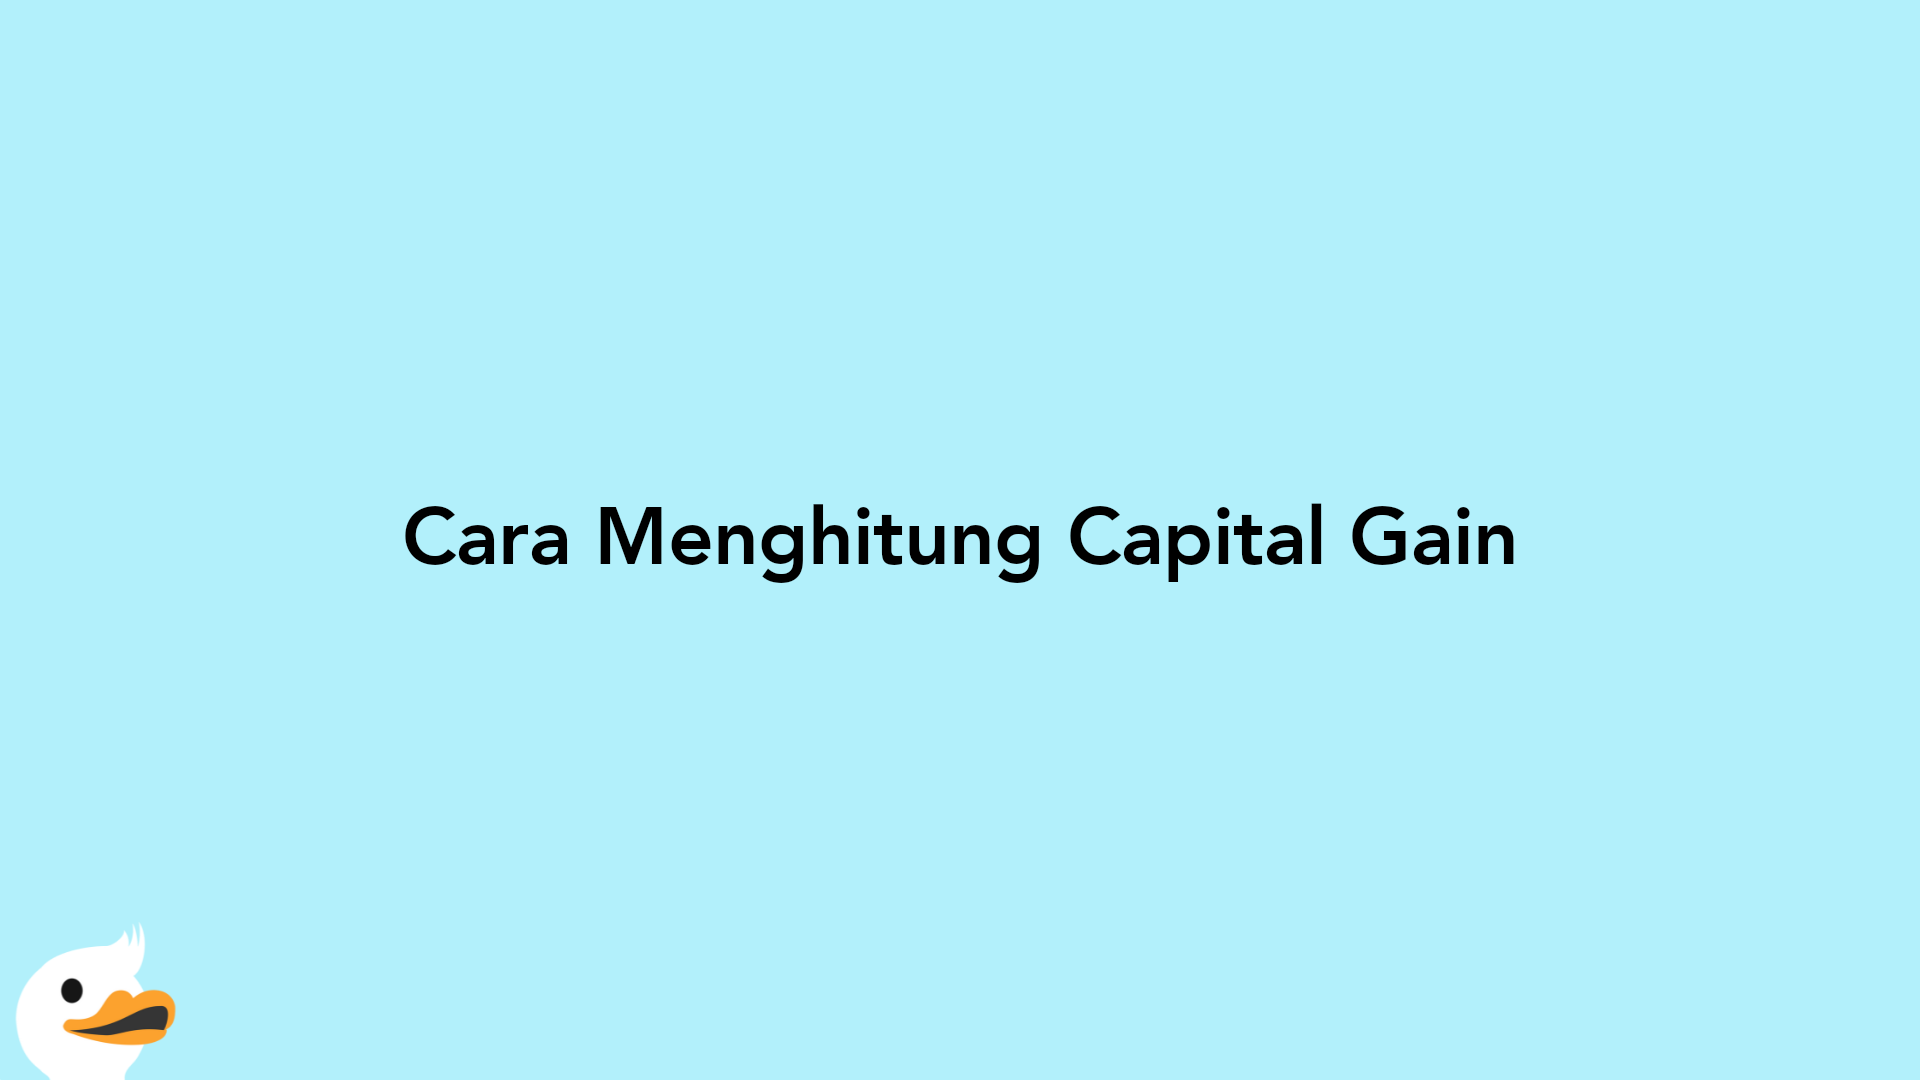 Cara Menghitung Capital Gain